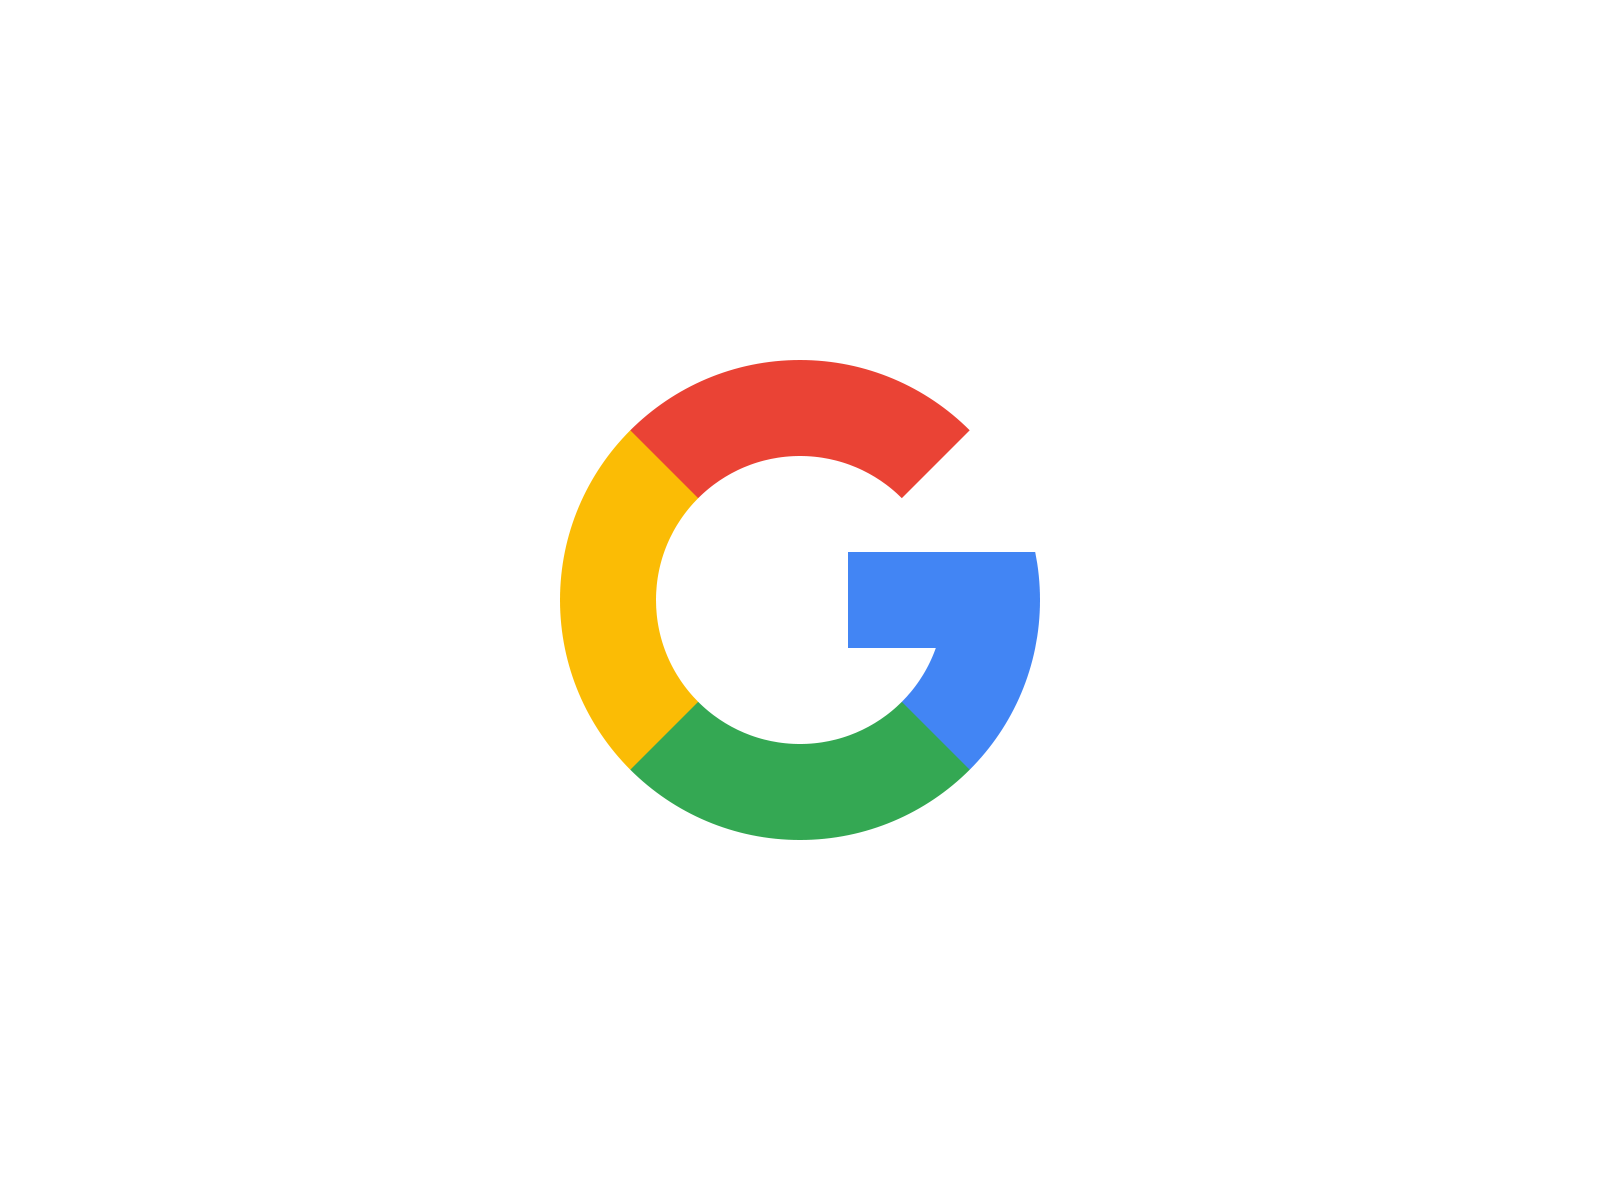 Revised google logo